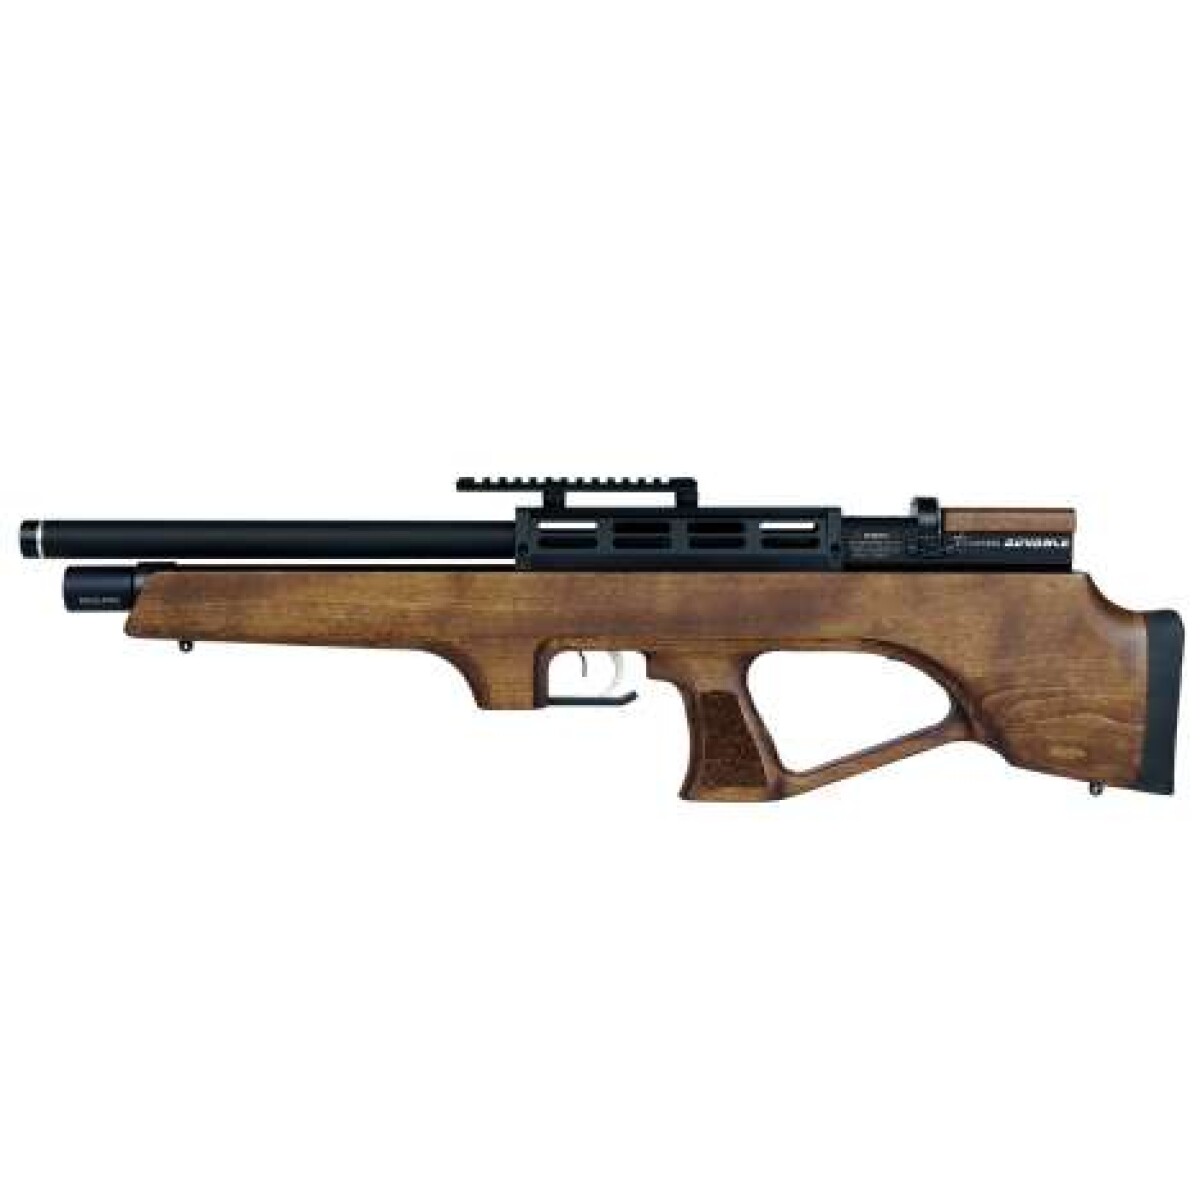 Rifle de PCP Advance – Cal. 6.35mm Regulado 